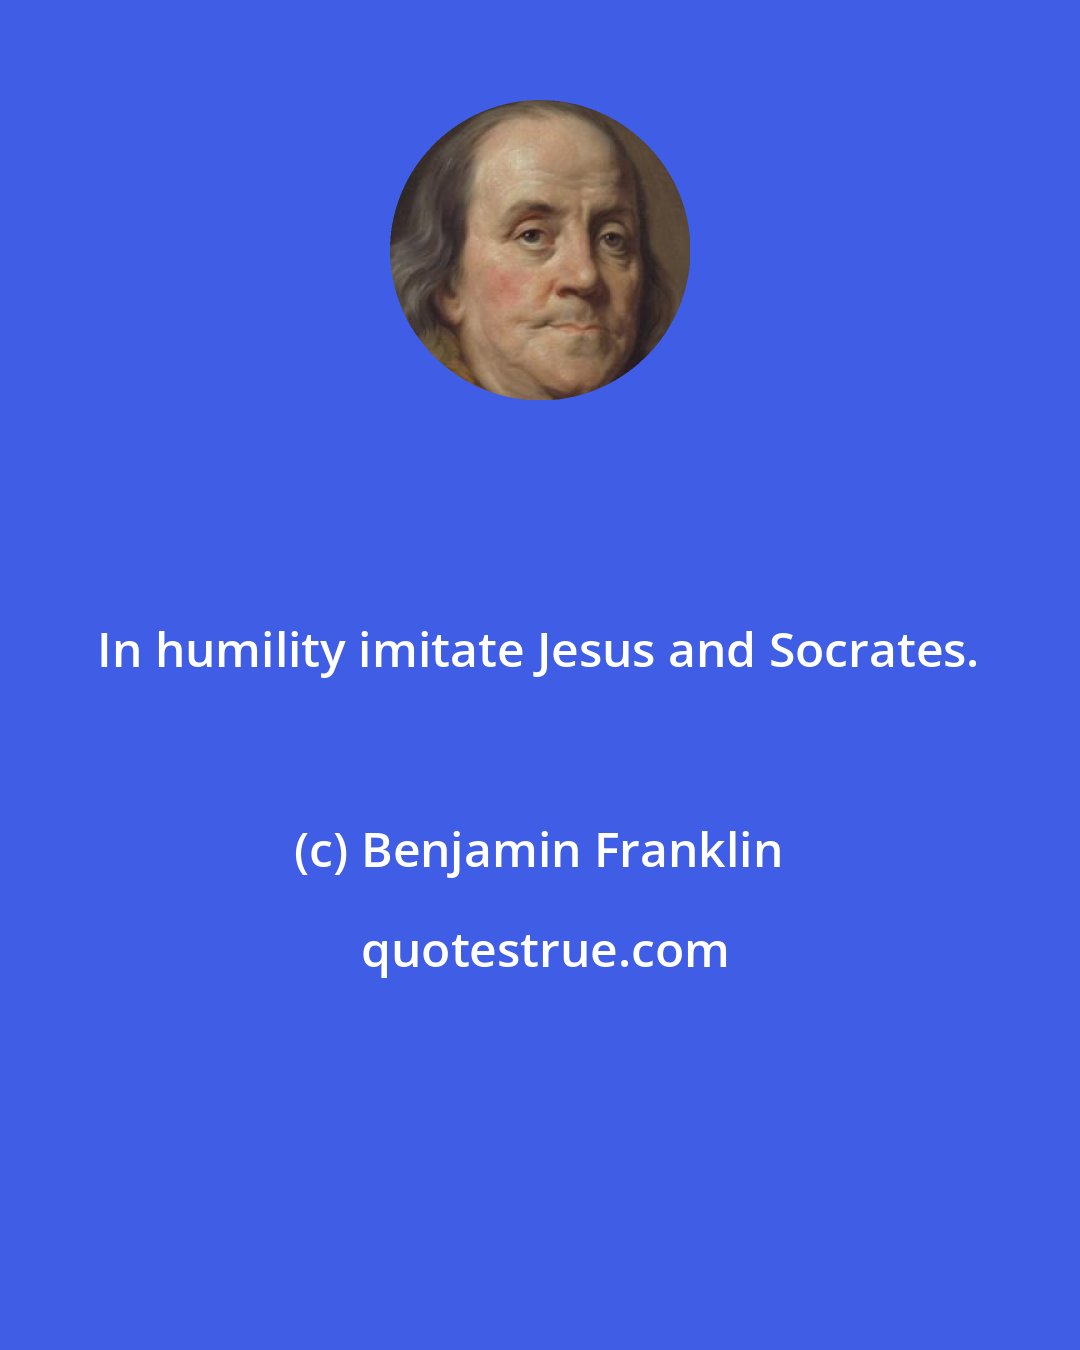 Benjamin Franklin: In humility imitate Jesus and Socrates.